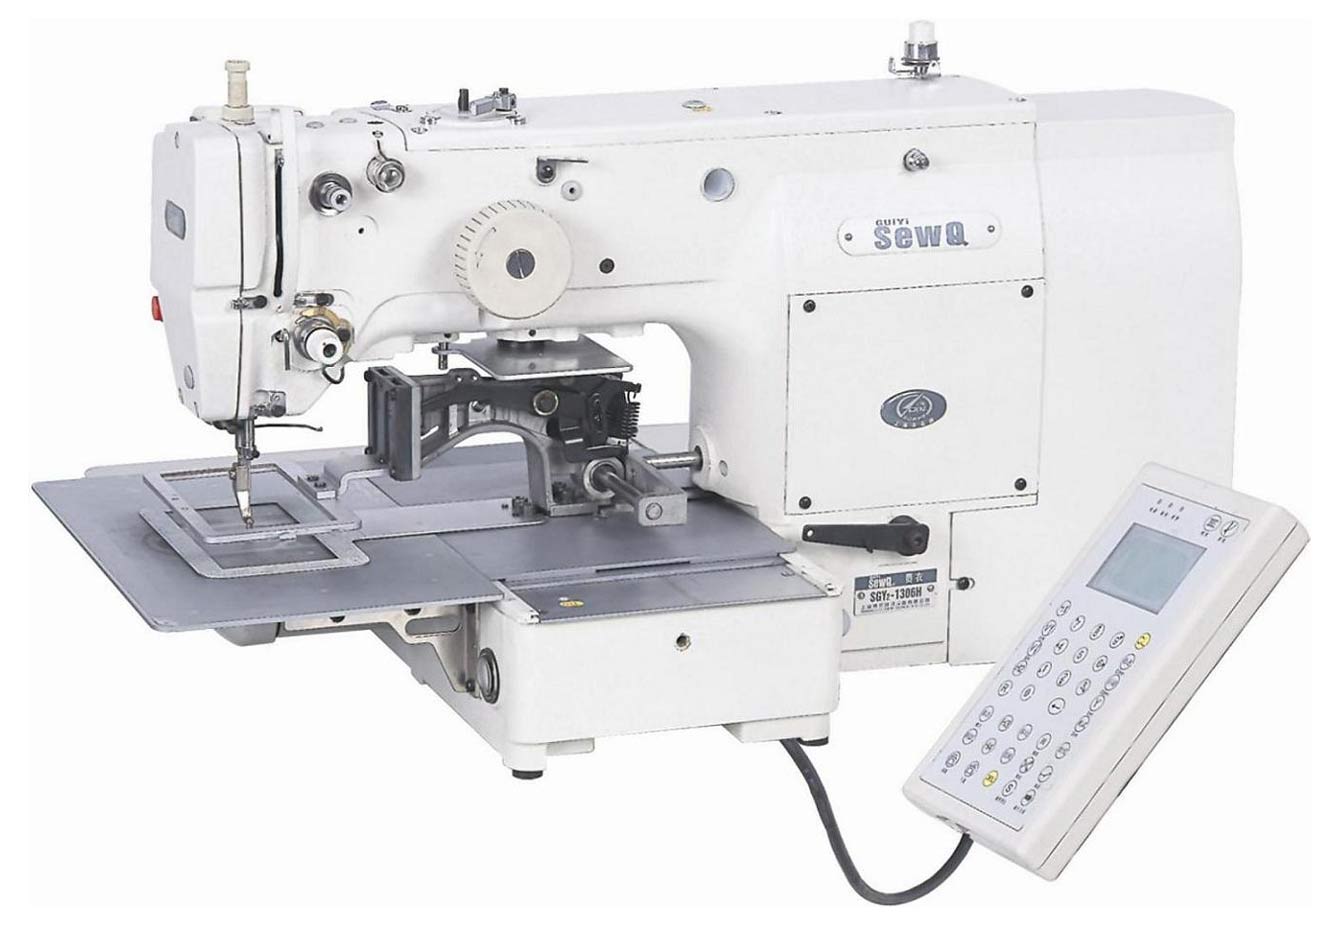  Computerized Servomotor Direct Drive Pattern Program Sewing Machine (Computerized servomoteur Direct Drive schéma du programme de machine à coudre)